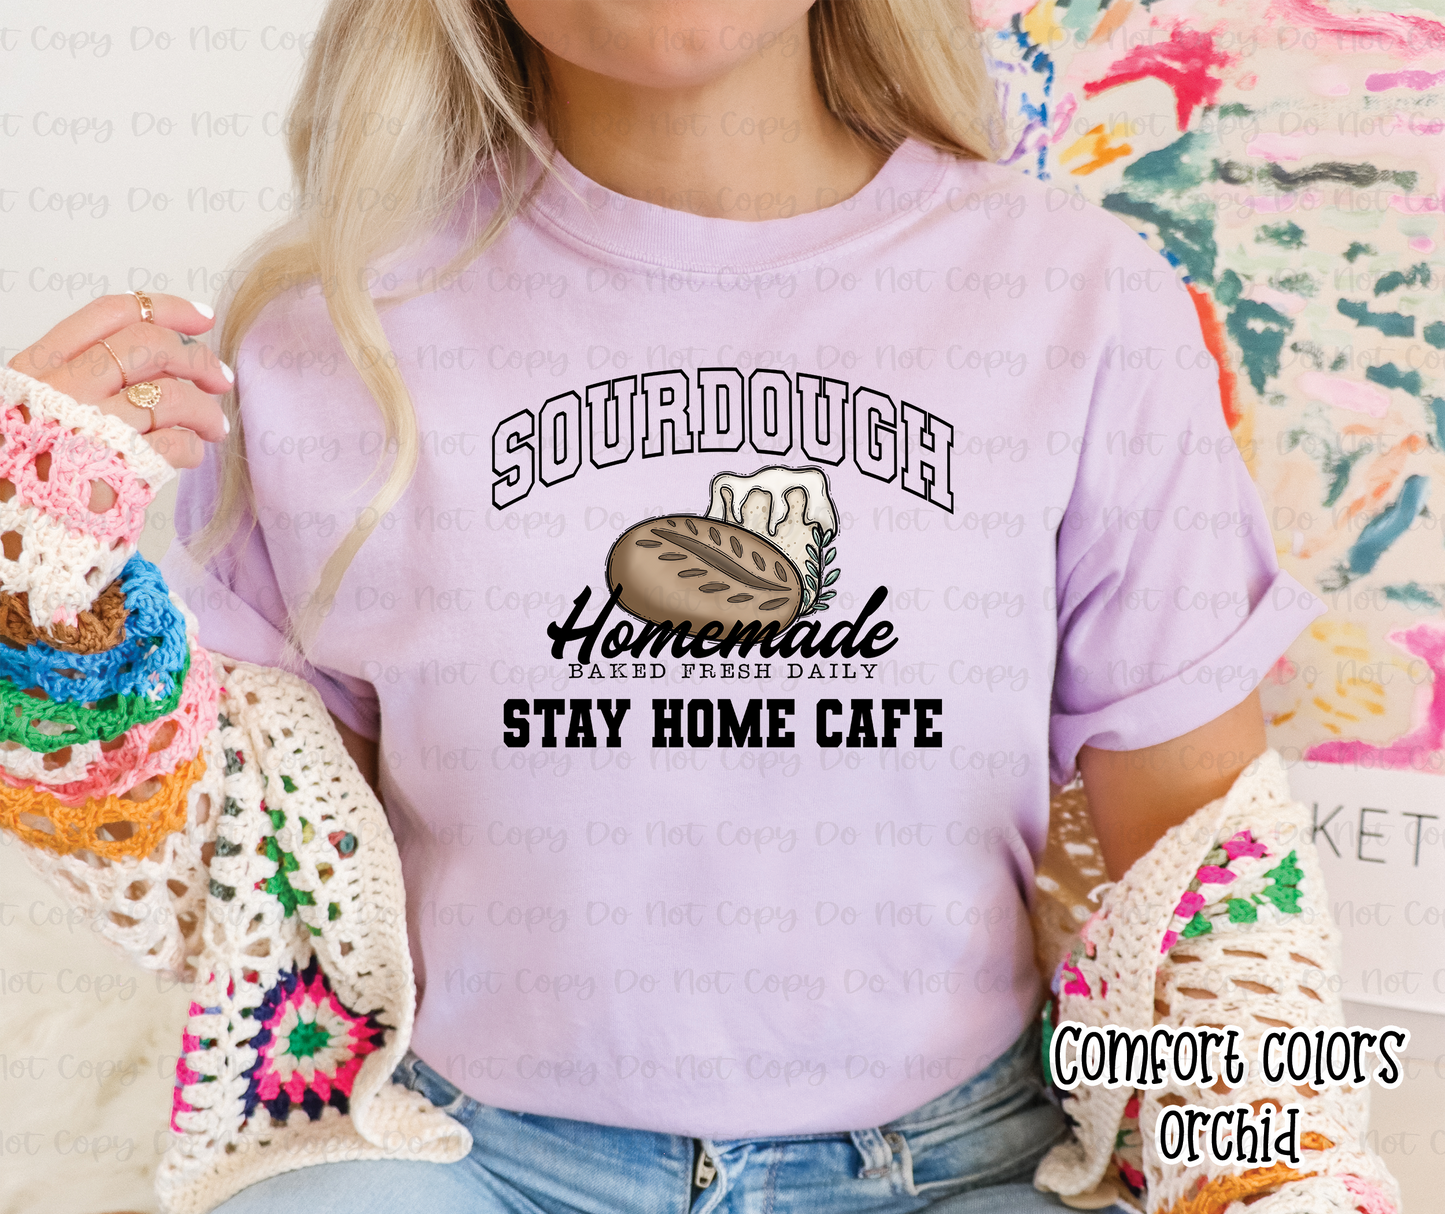 Sourdough Stay Home Cafe